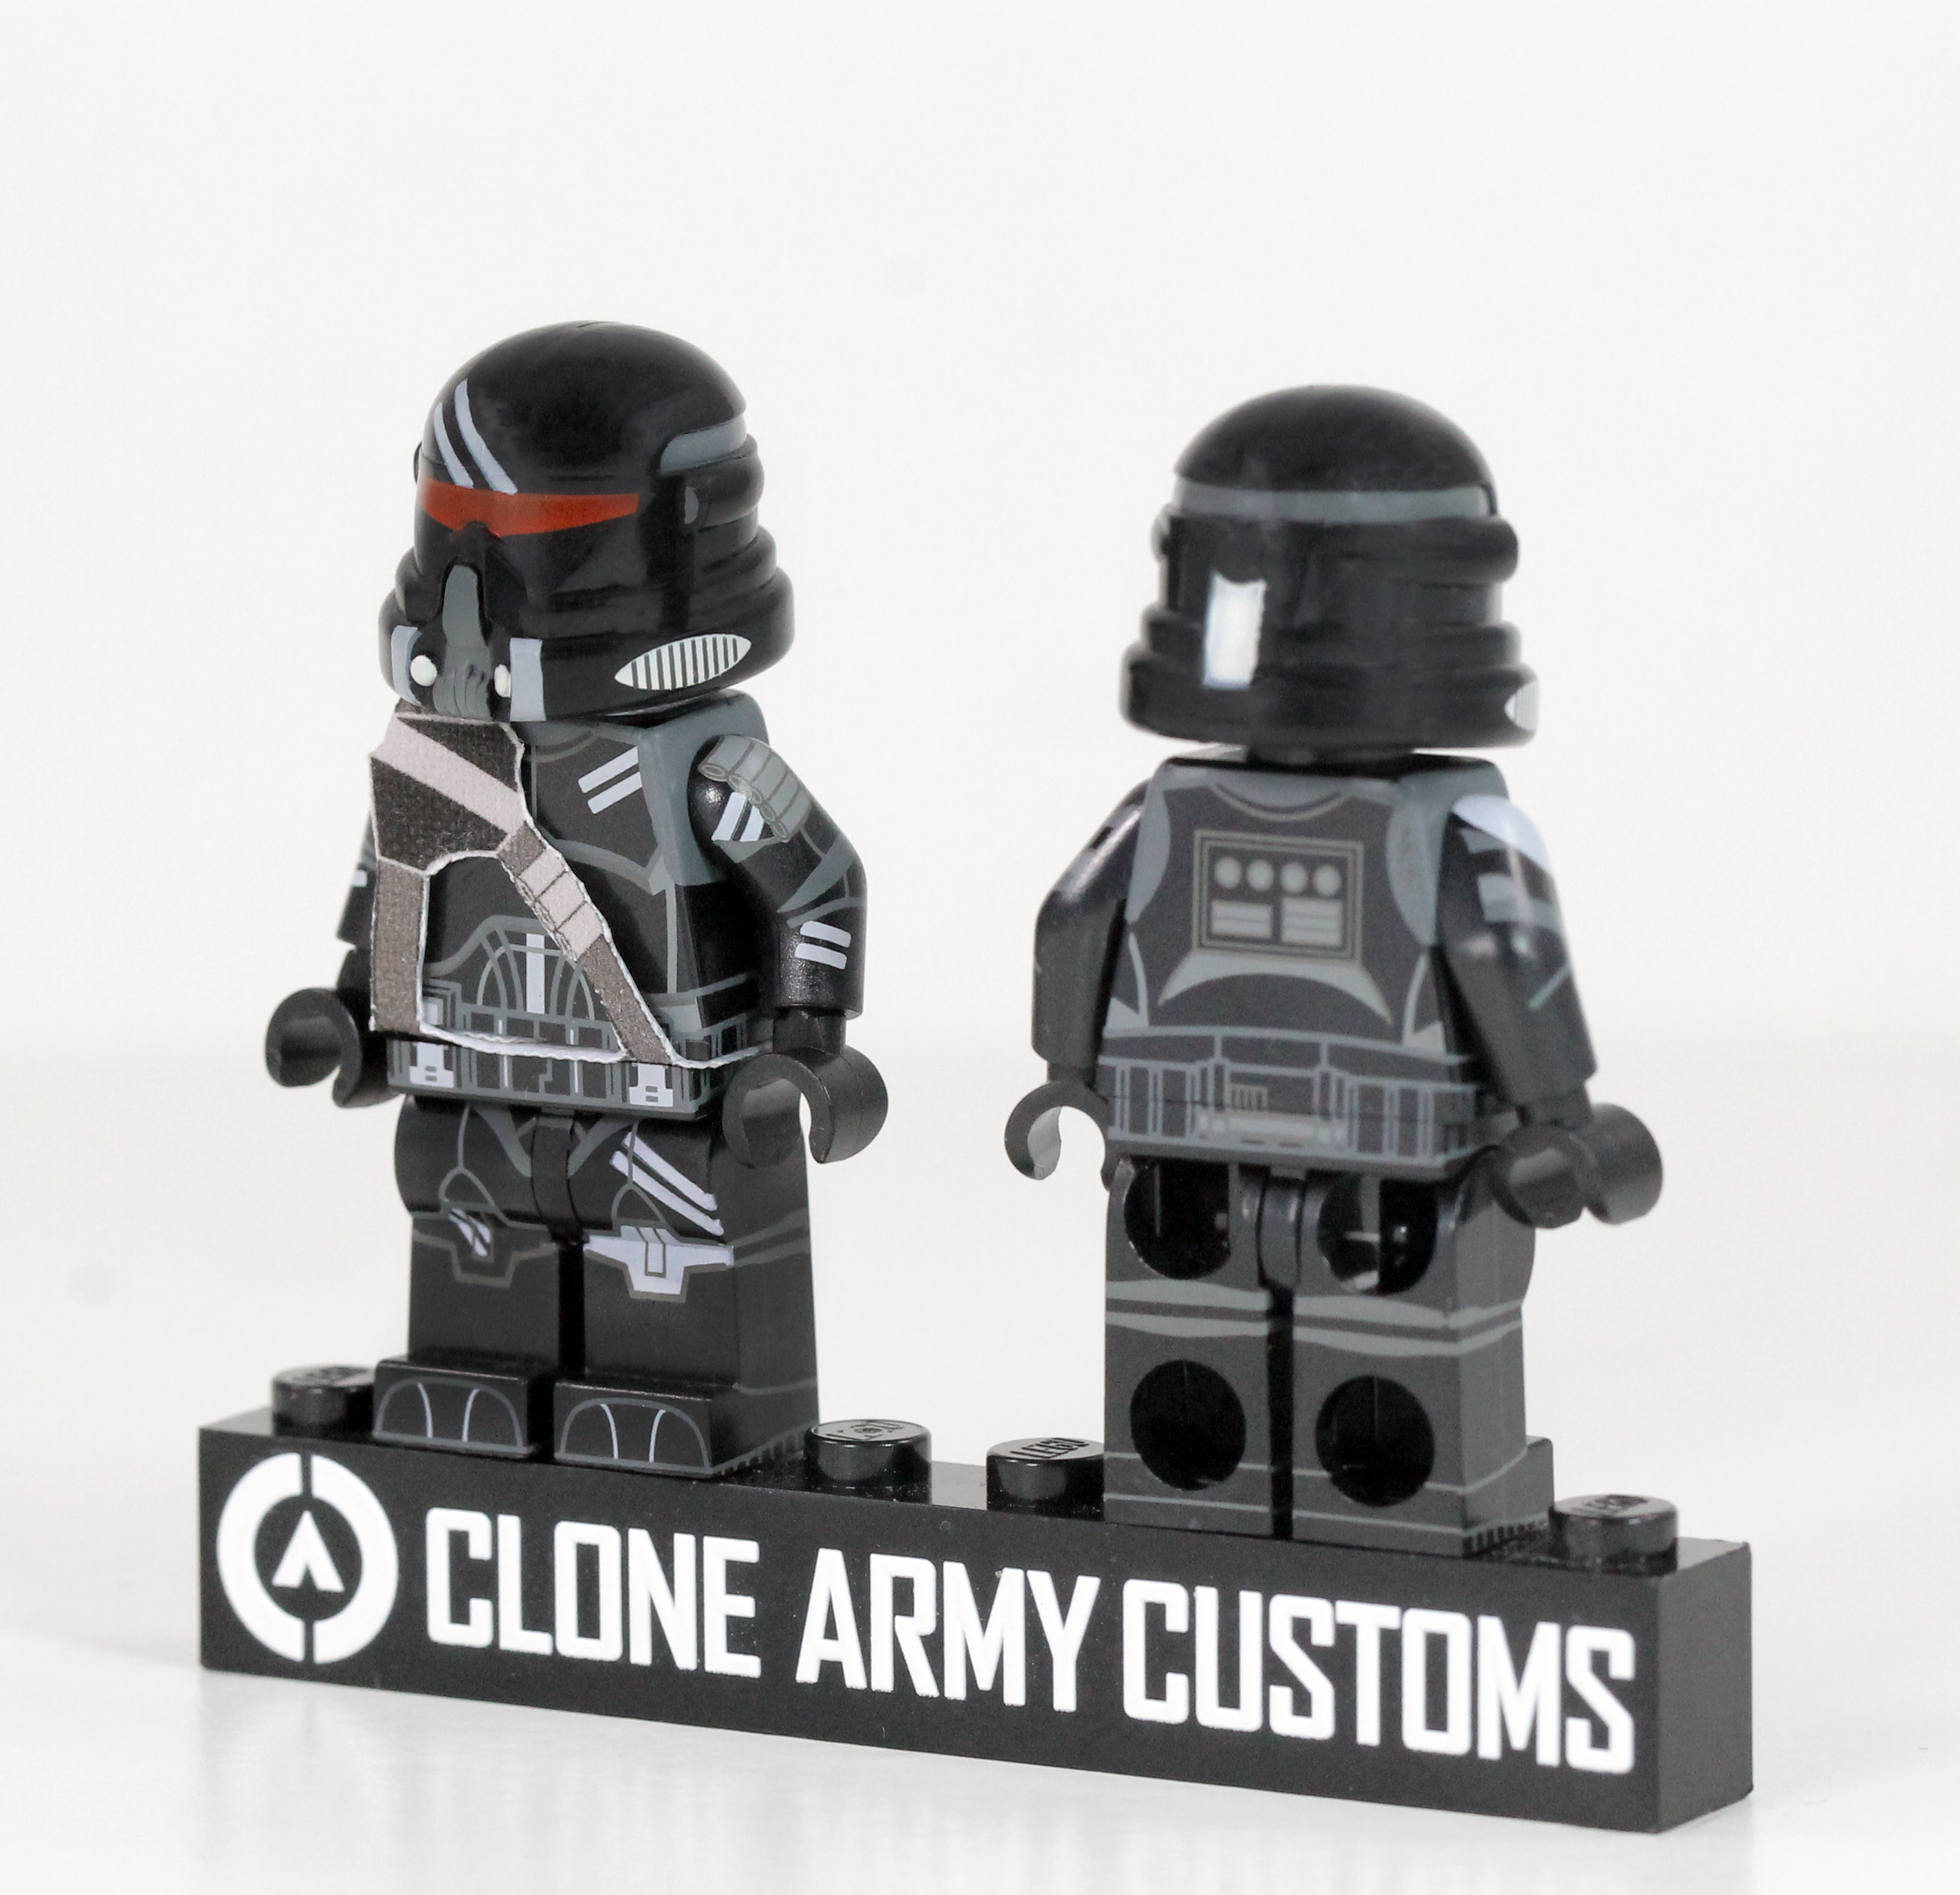 Airborne Shadow Trooper Star Wars Minifig - Clone Army Customs (CAC)